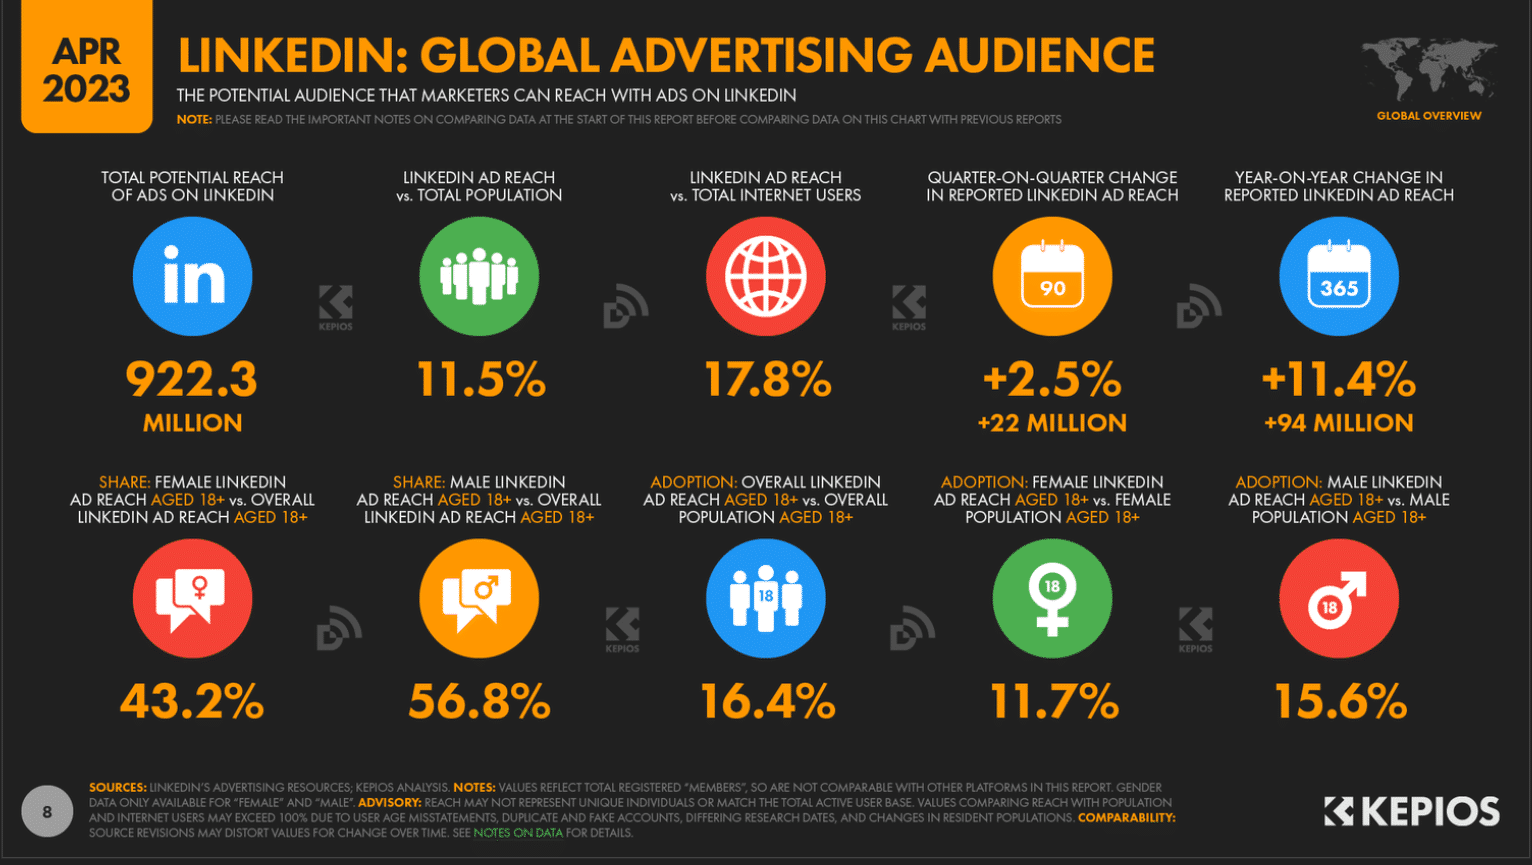 Linkedin: ผู้ชมโฆษณาระดับโลก